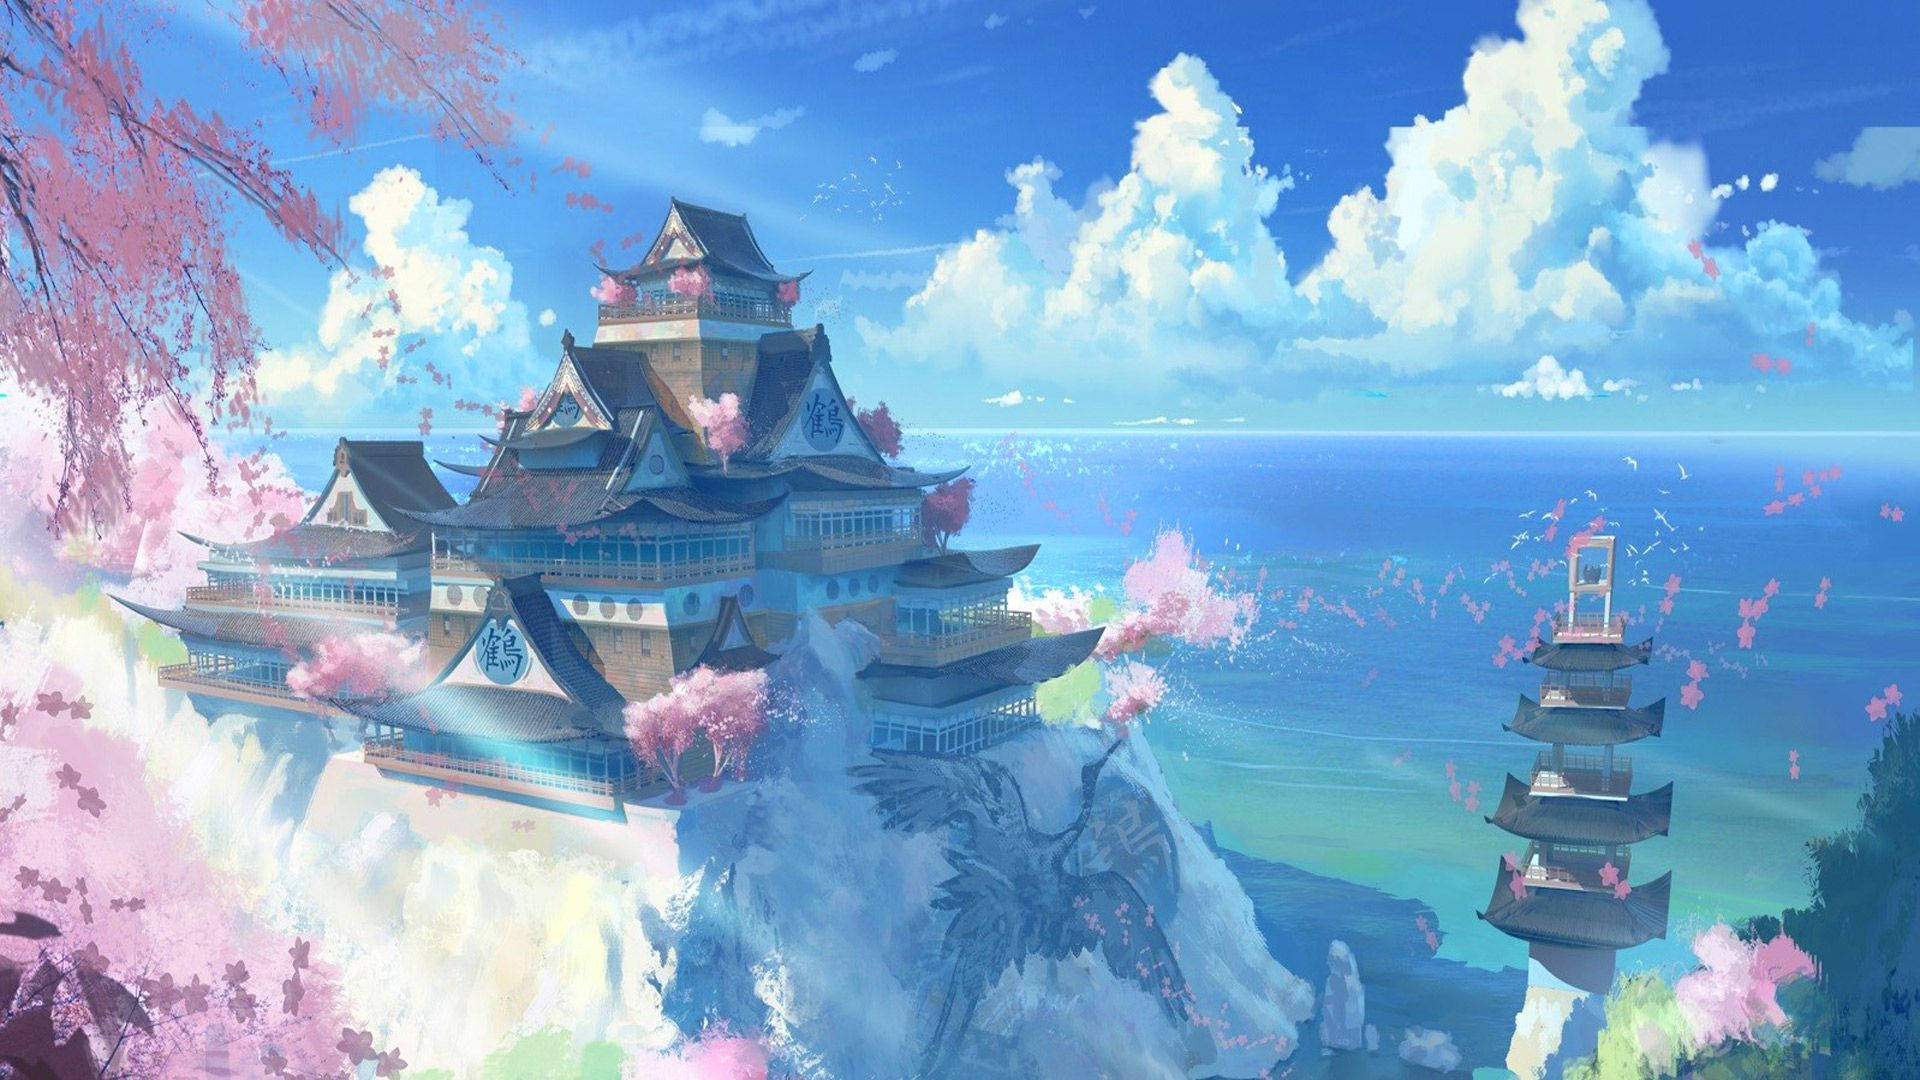 Free Anime Landscape Wallpaper Downloads, [100+] Anime Landscape Wallpapers  for FREE 